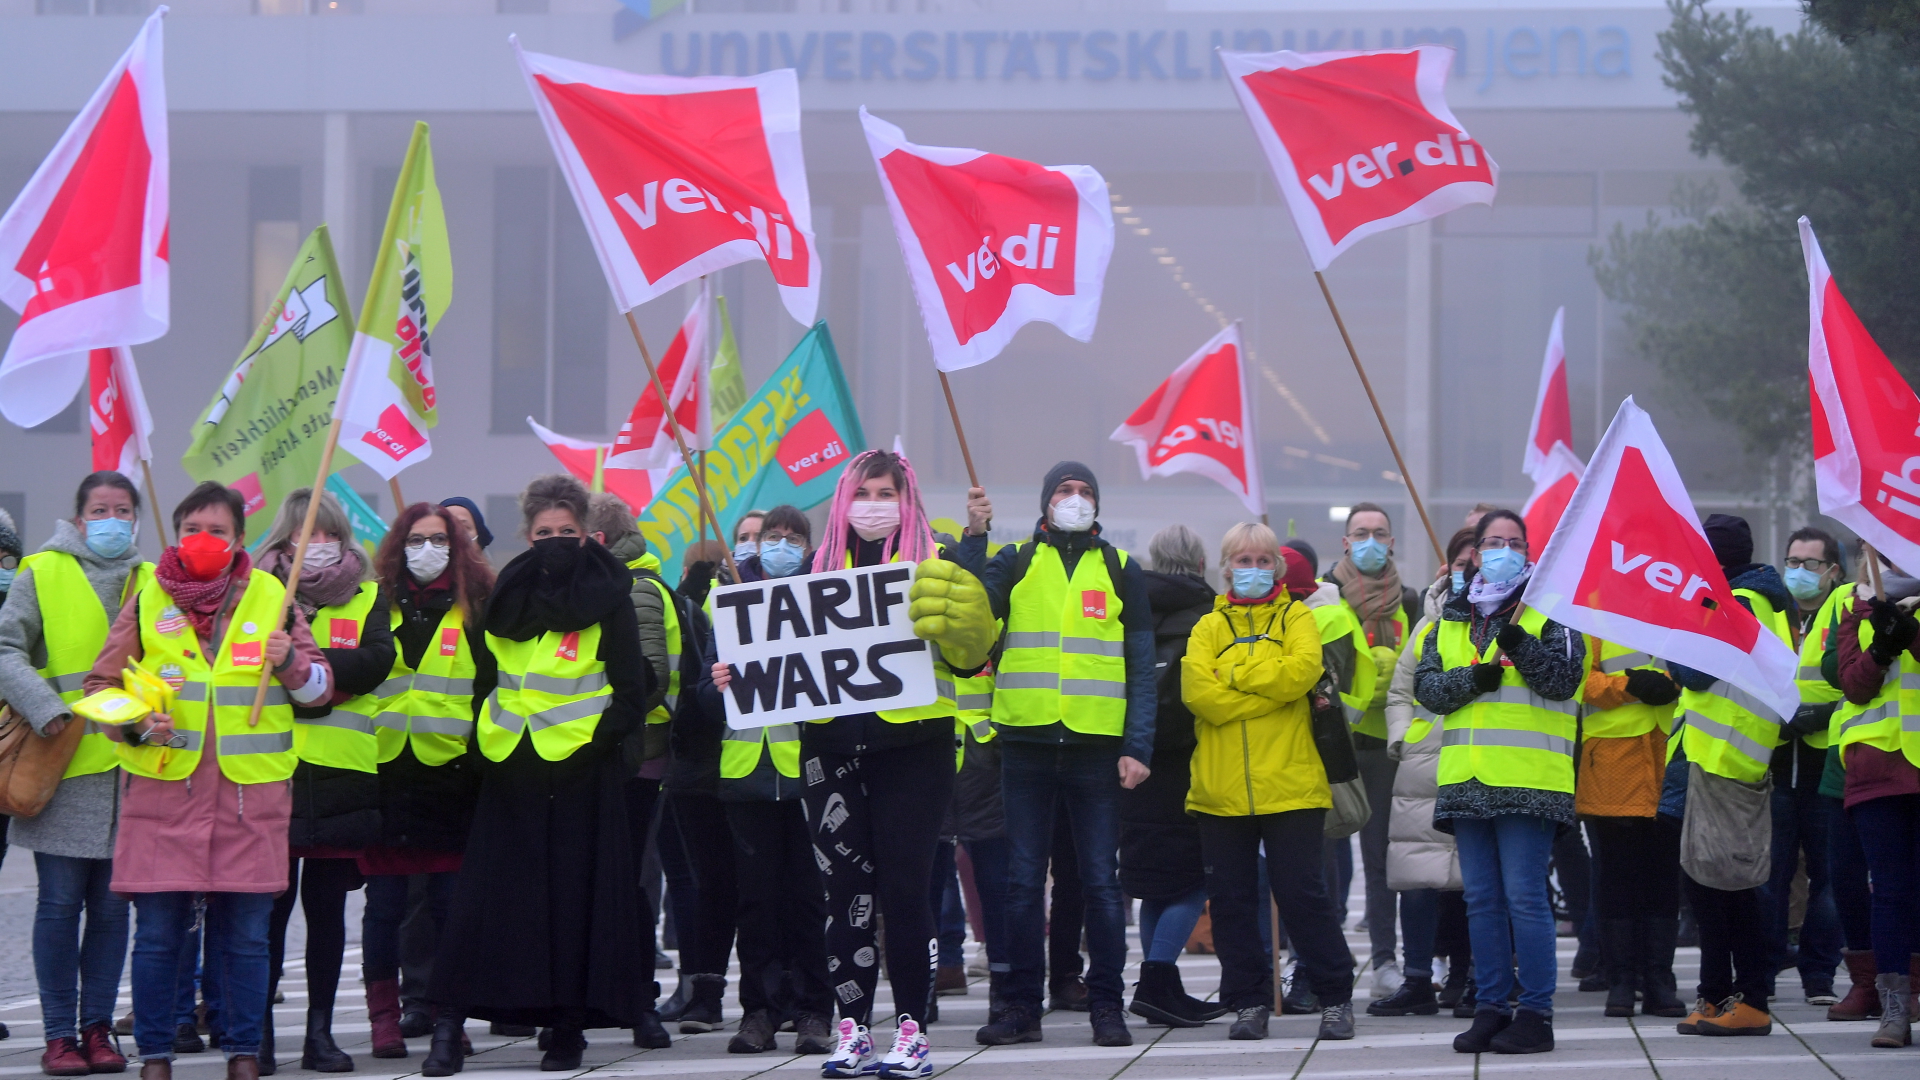 Streikende vor dem Universitätsklinikum Jena mit dem Schriftzug "Tarif Wars" auf einem Plakat. | dpa